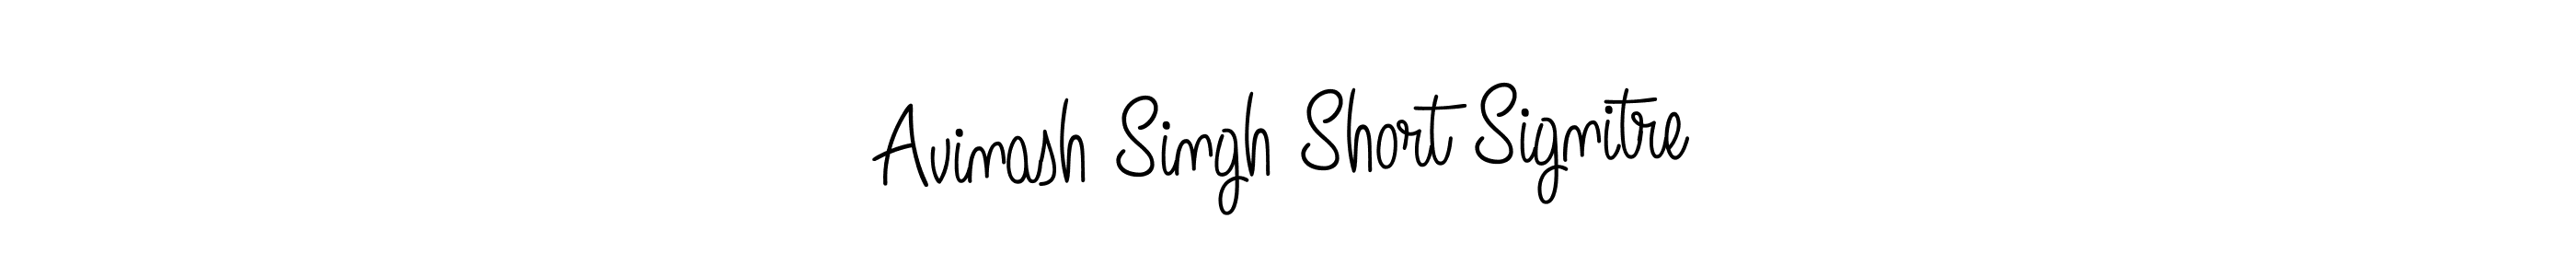 Best and Professional Signature Style for Avinash Singh Short Signitre. Angelique-Rose-font-FFP Best Signature Style Collection. Avinash Singh Short Signitre signature style 5 images and pictures png